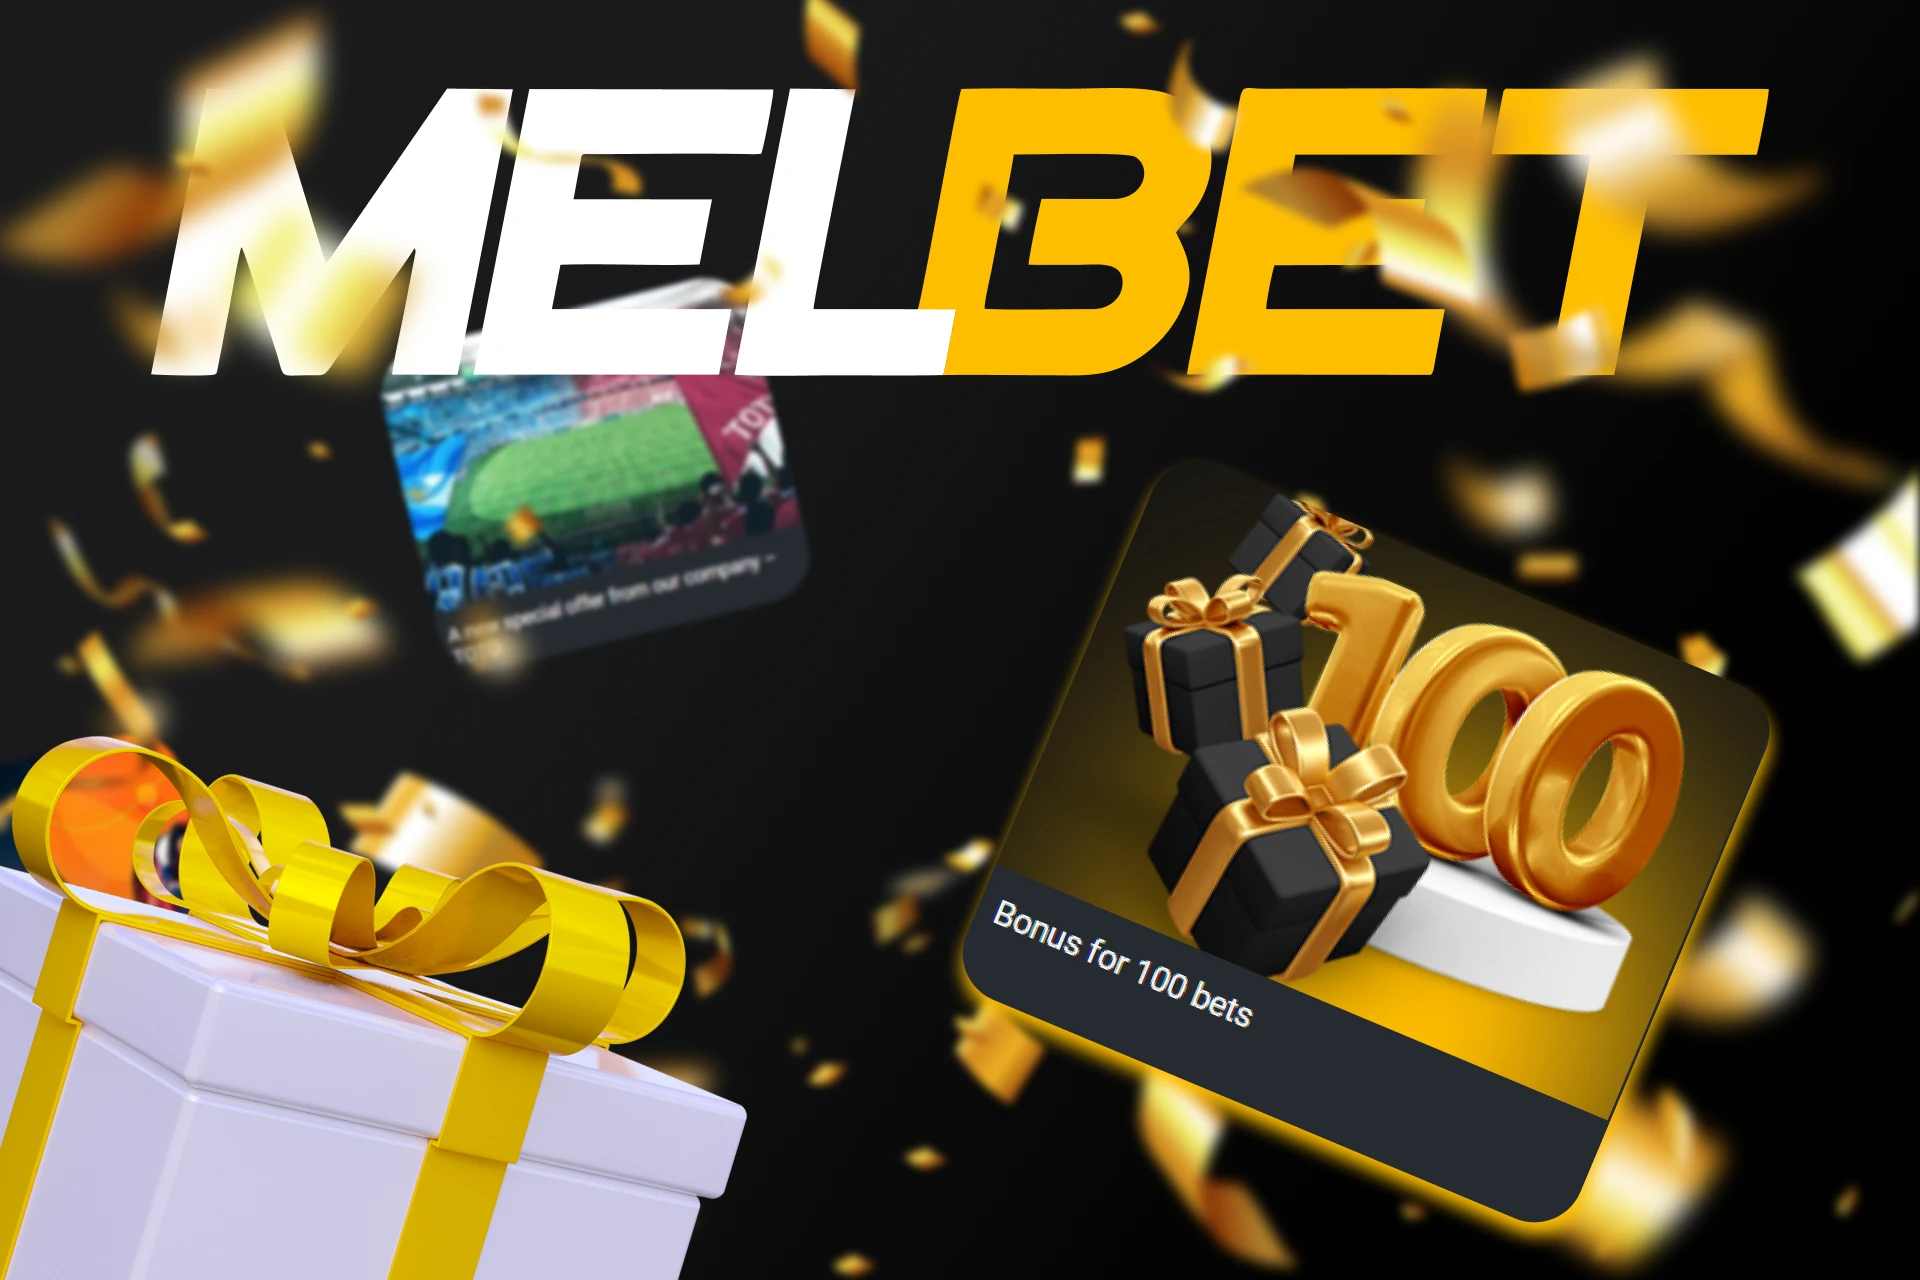 Get Melbet bonus for 100 bets.